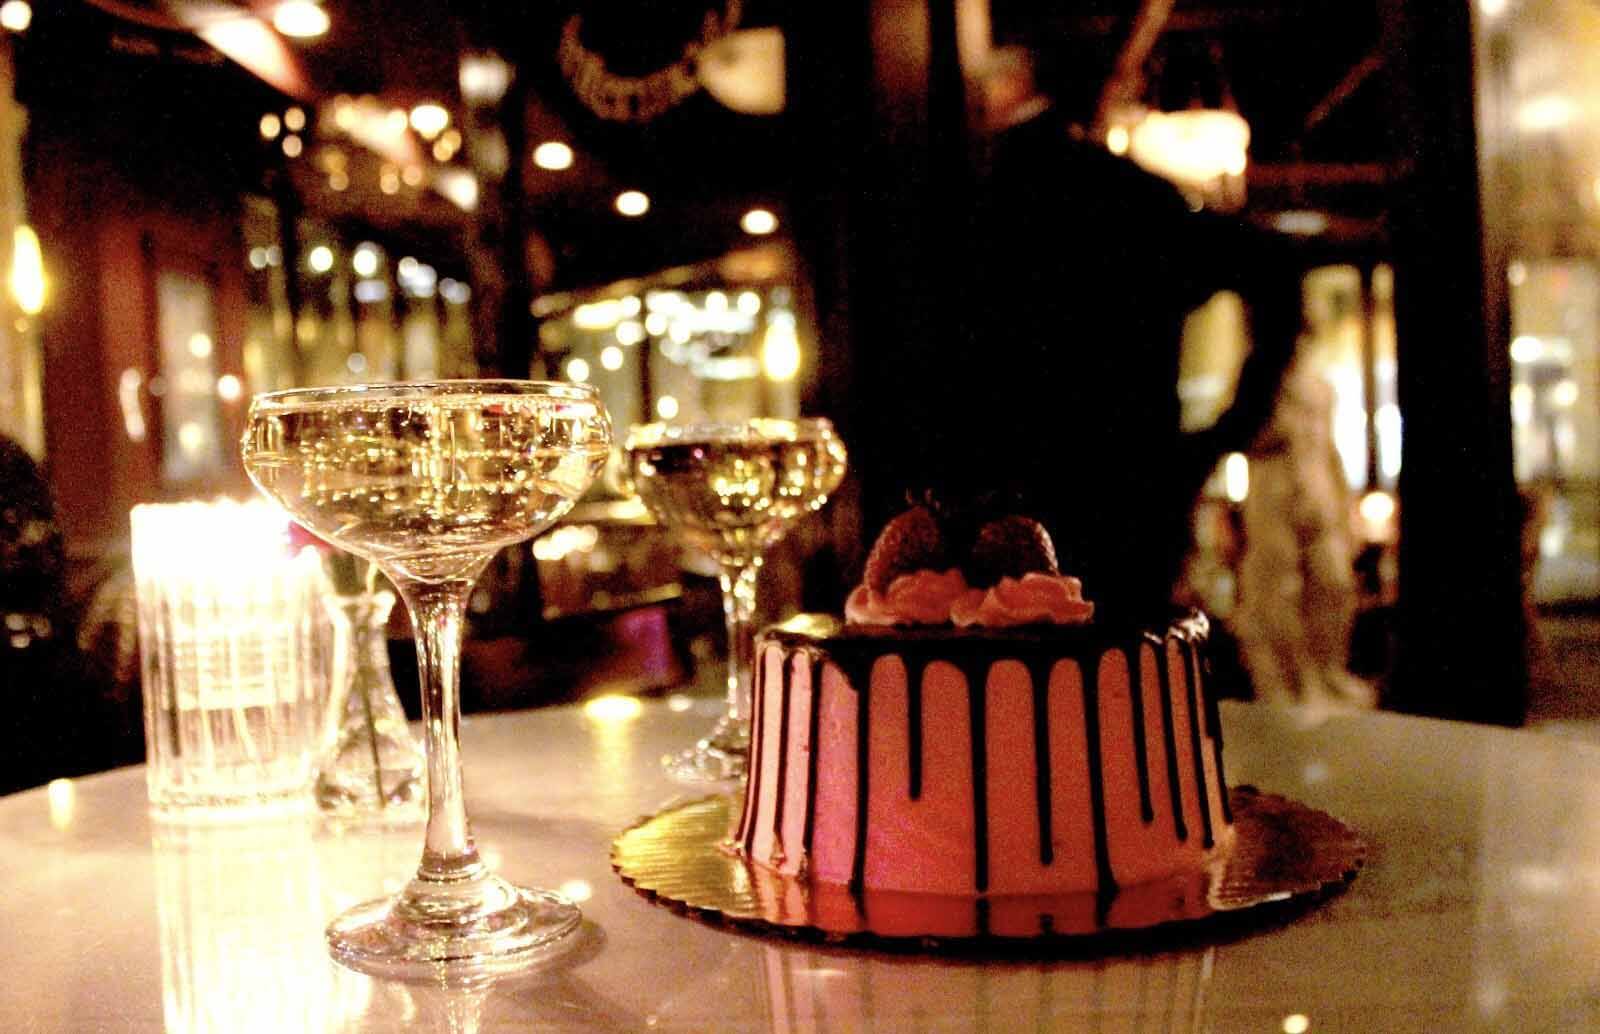 Cake and wine from Cafe Intermezzo 